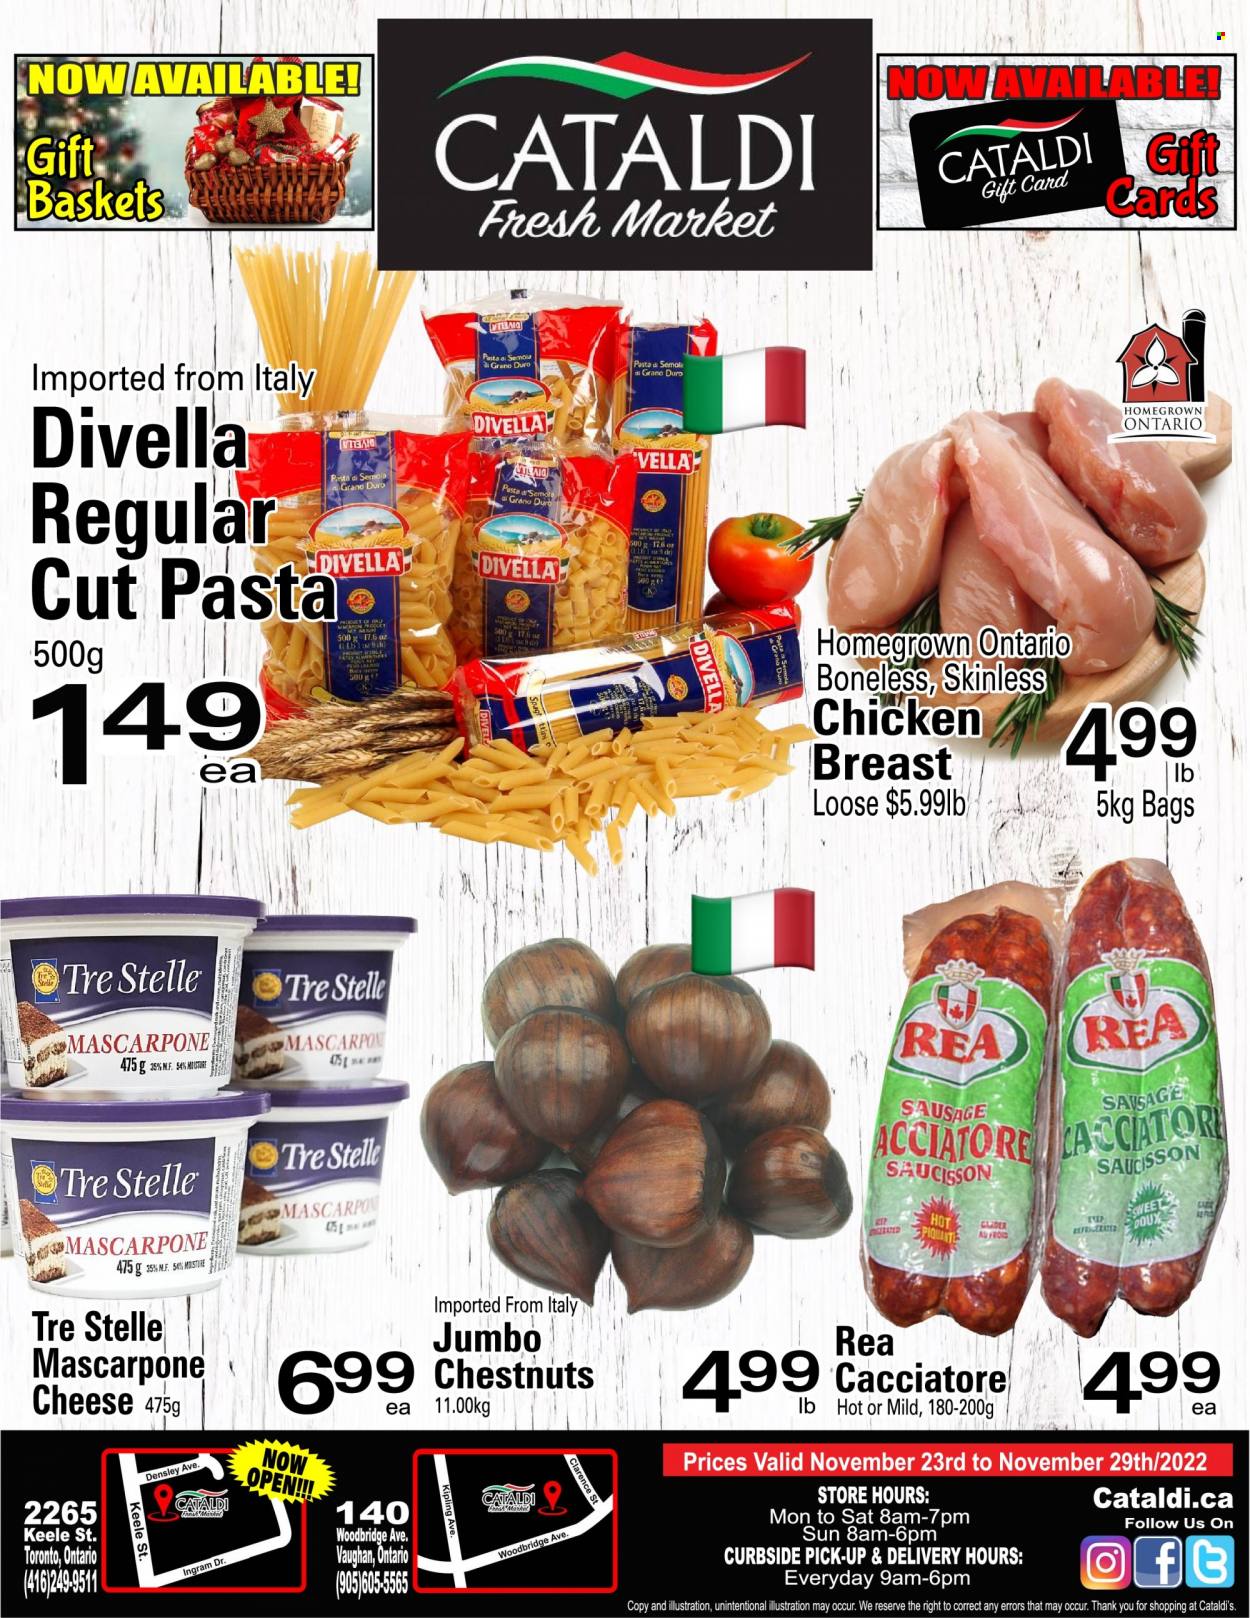 thumbnail - Cataldi Fresh Market Flyer - November 23, 2022 - November 29, 2022 - Sales products - pasta, sausage, cheese, chestnuts, Woodbridge, chicken breasts, chicken, bag, mascarpone. Page 1.